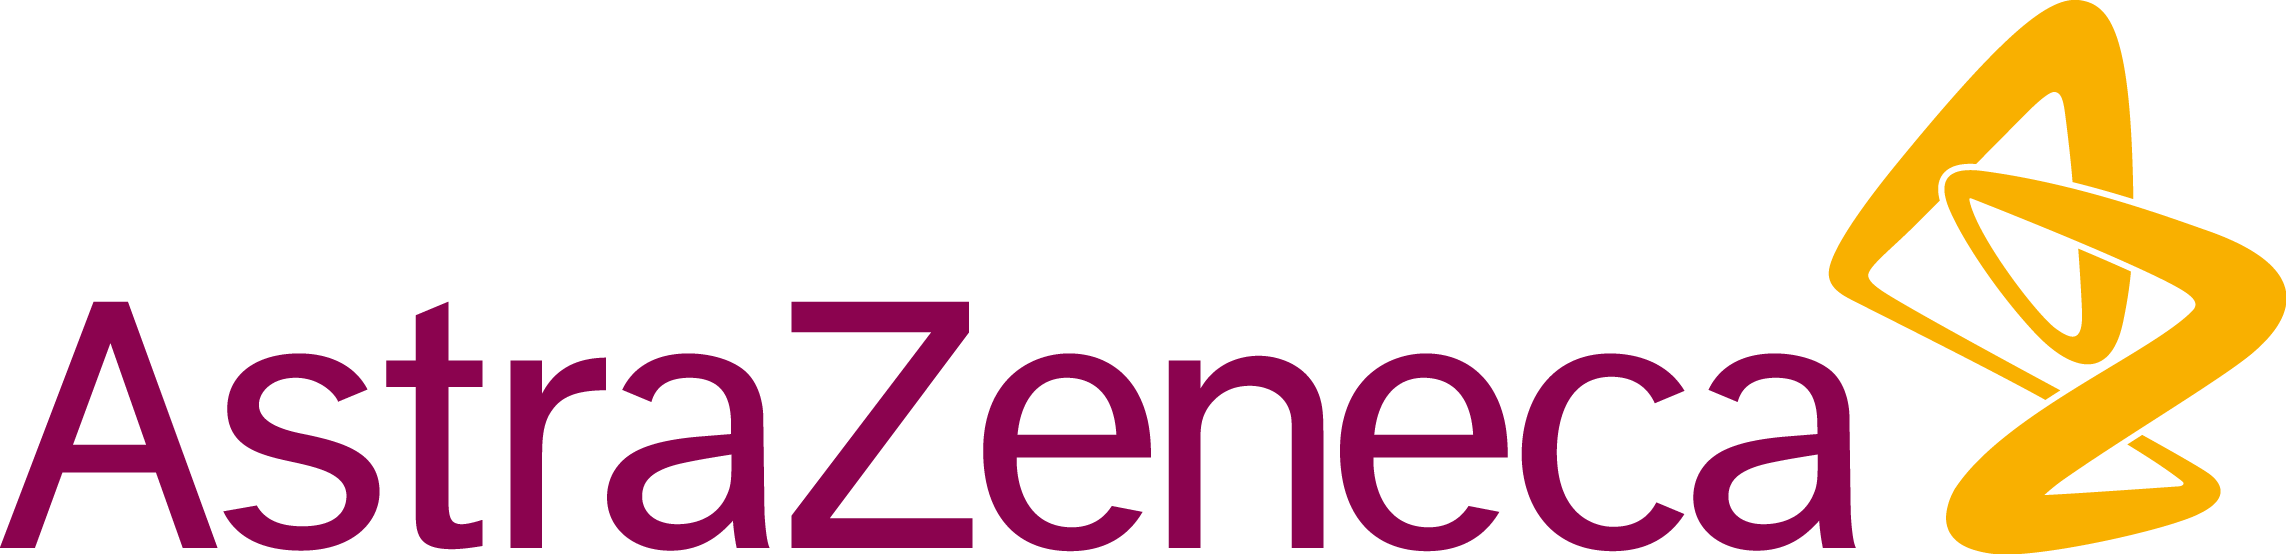 Astrazeneca Logo PNG